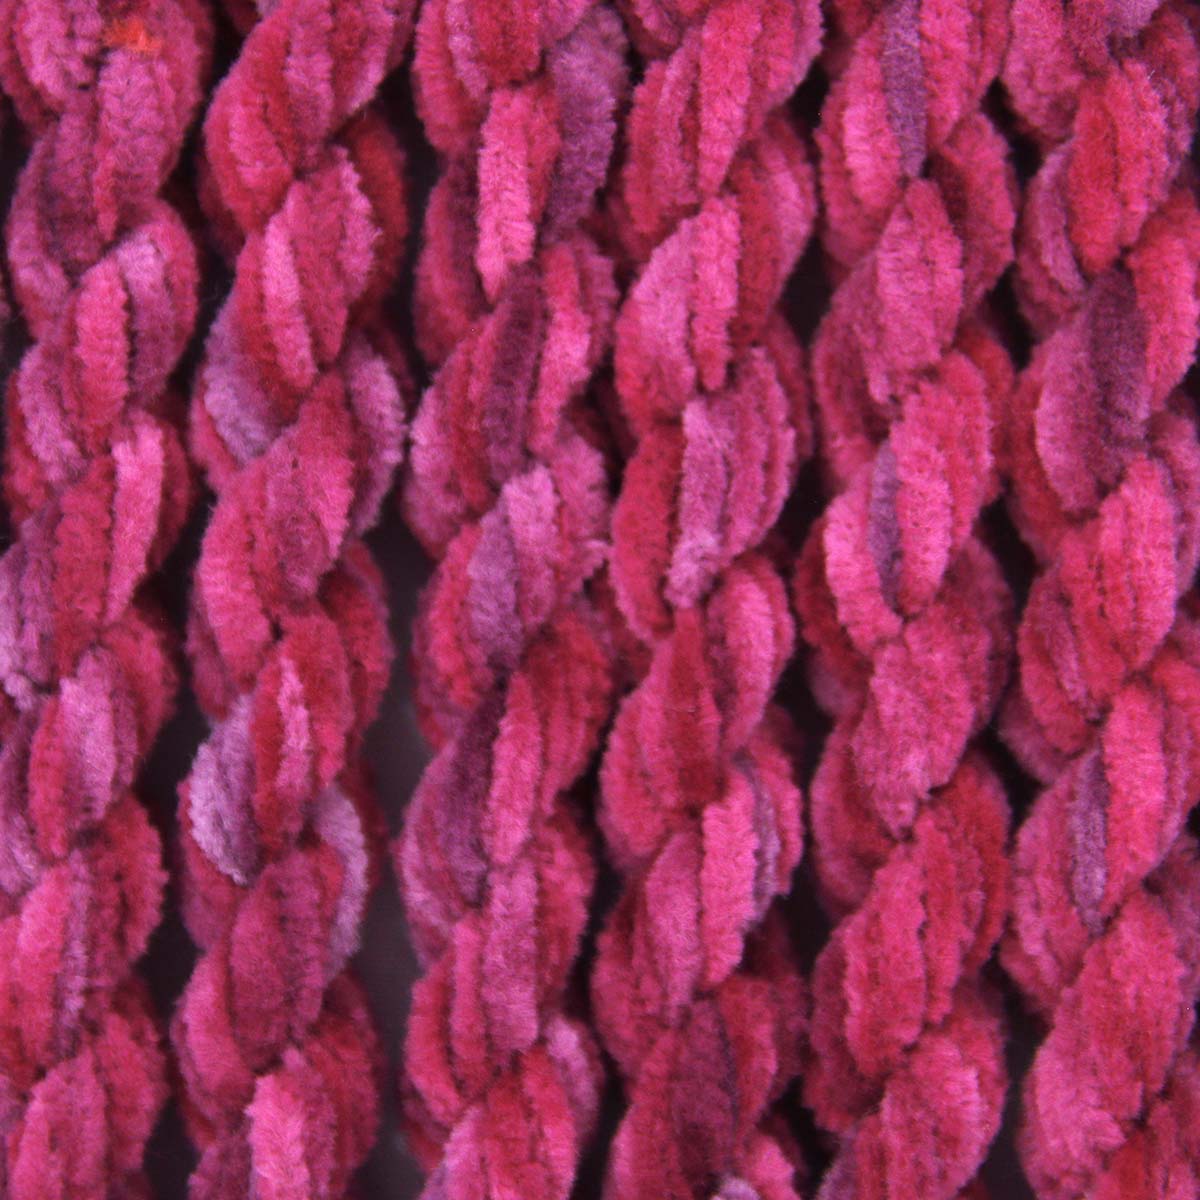 www.colourstreams.com.au Colour Streams Hand Dyed Chenille Threads Slow Stitch Embroidery Textile Arts Fibre DL Lipstick DL 54 Pinks Purples